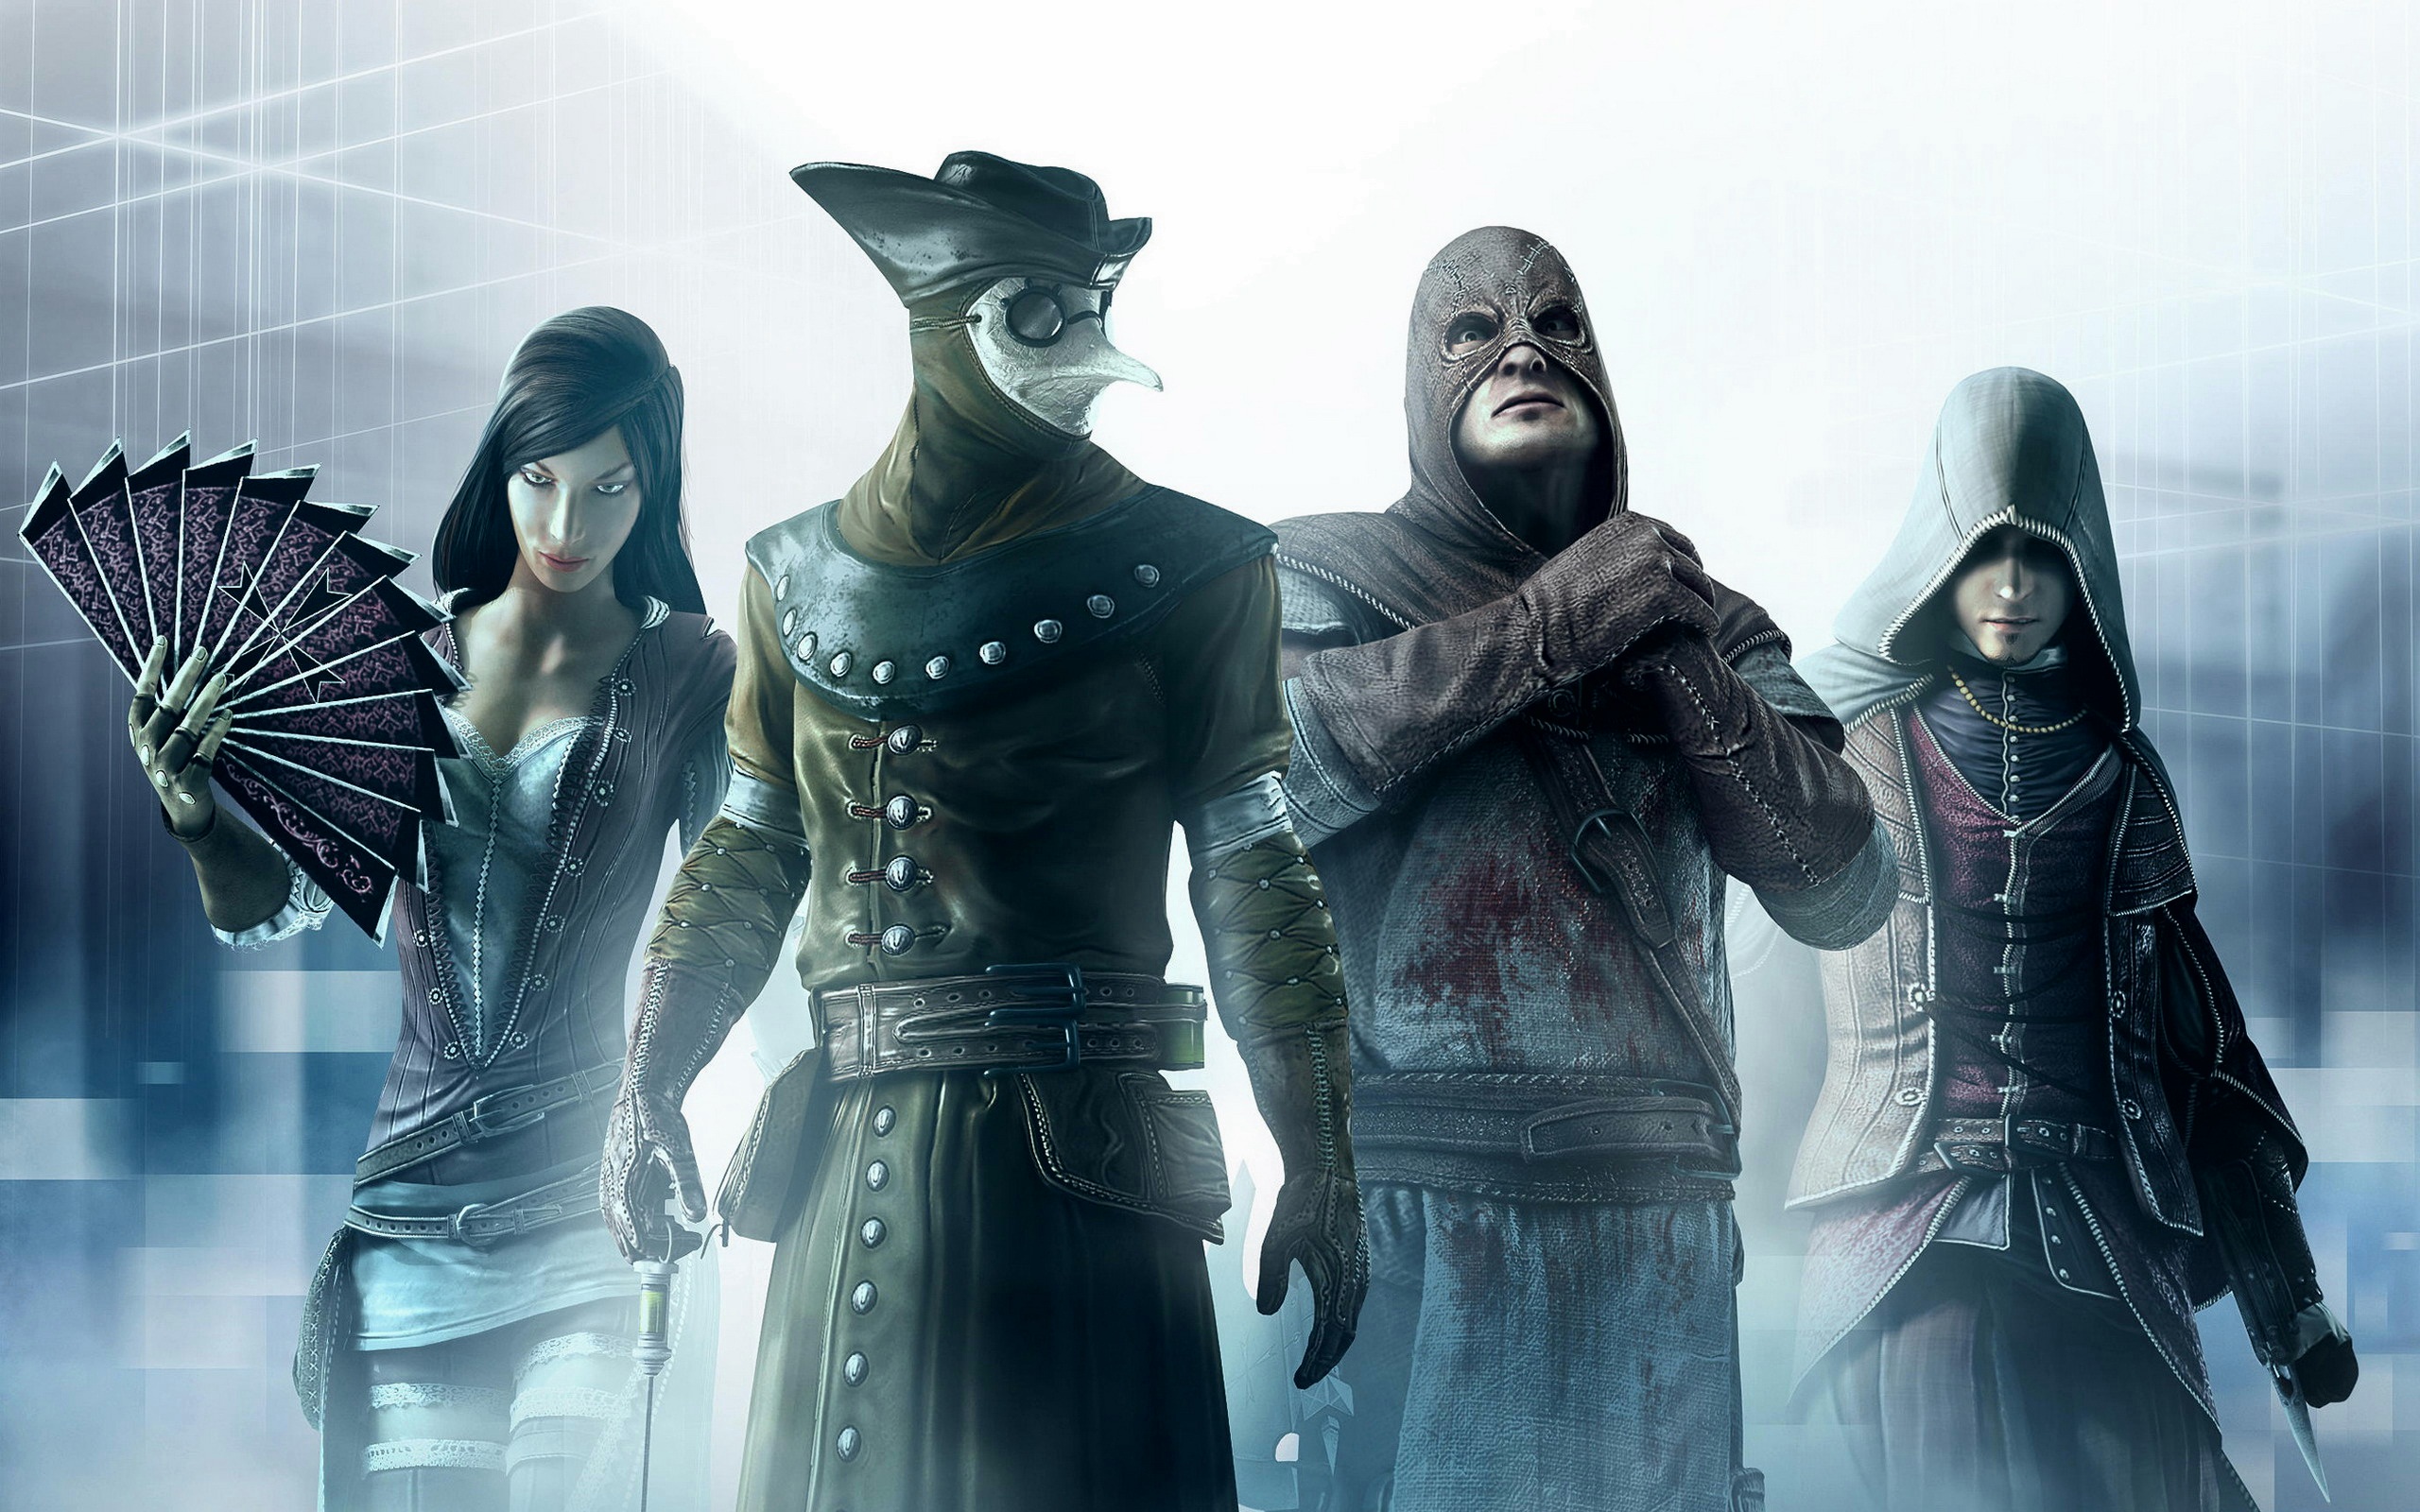 Assassin's Creed: Brotherhood Wallpapers